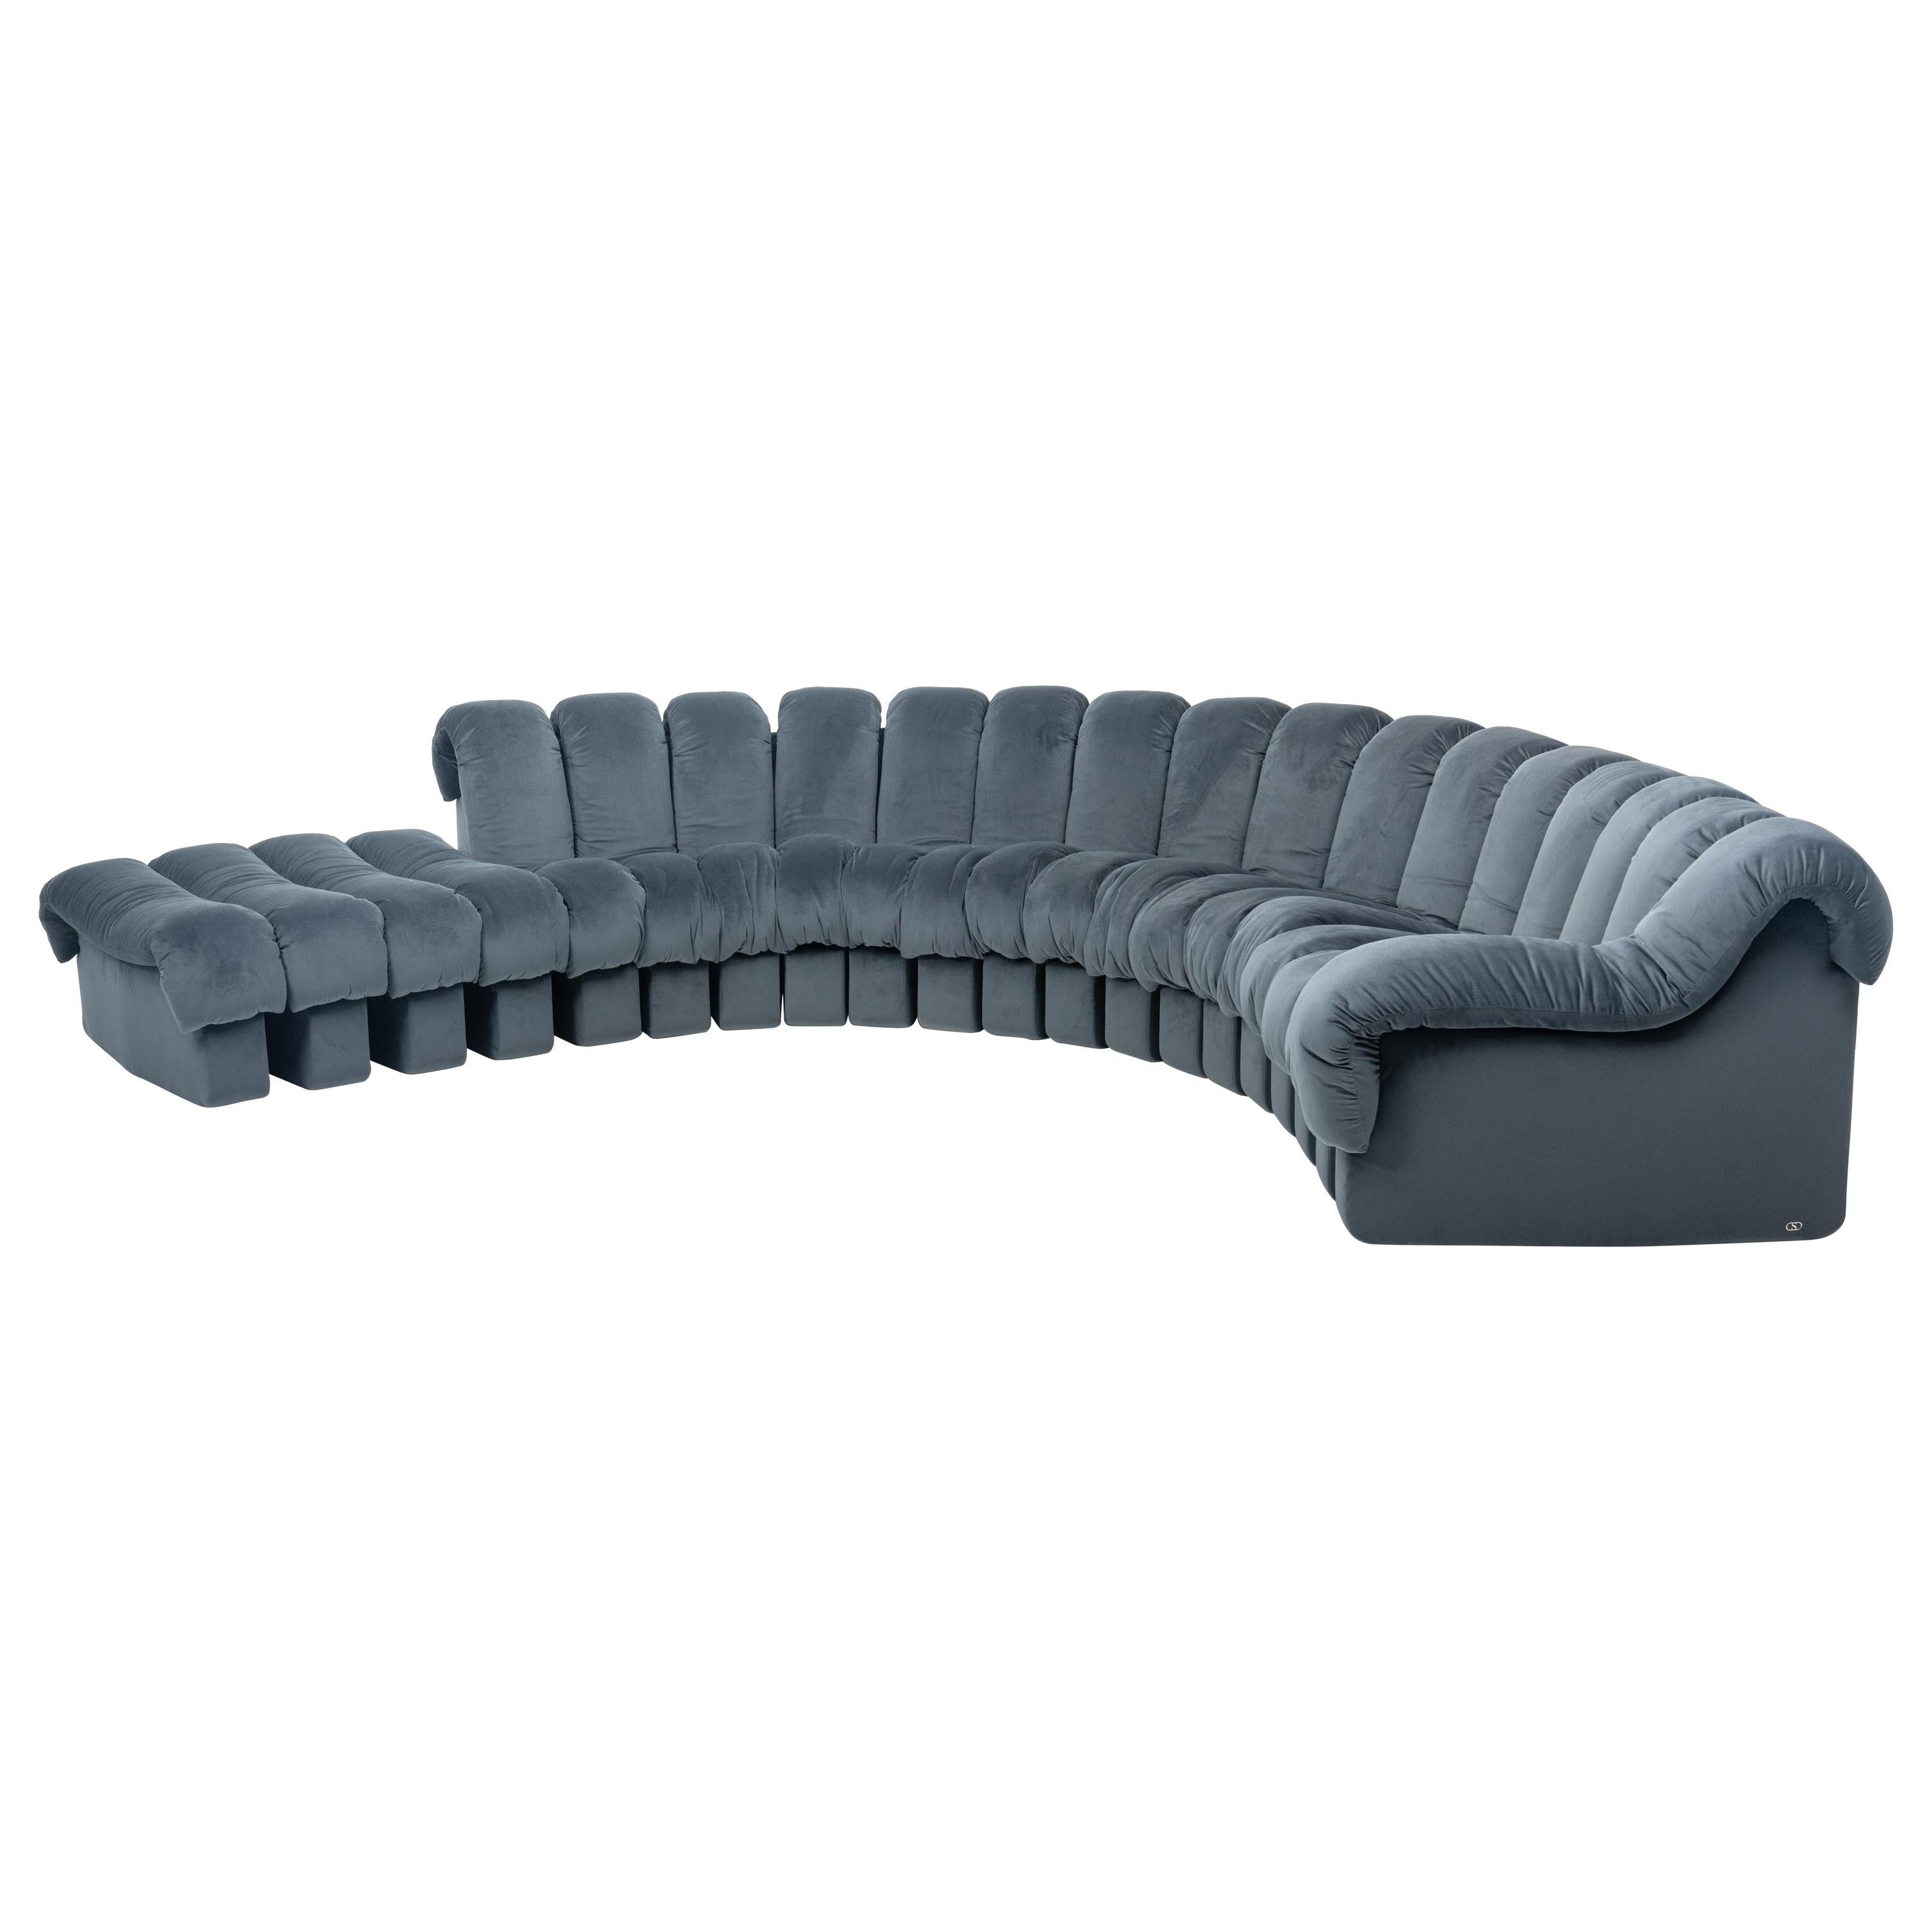 De Sede DS-600 Snake-Shape Modular Sofa in Blue with Adjustable Elements